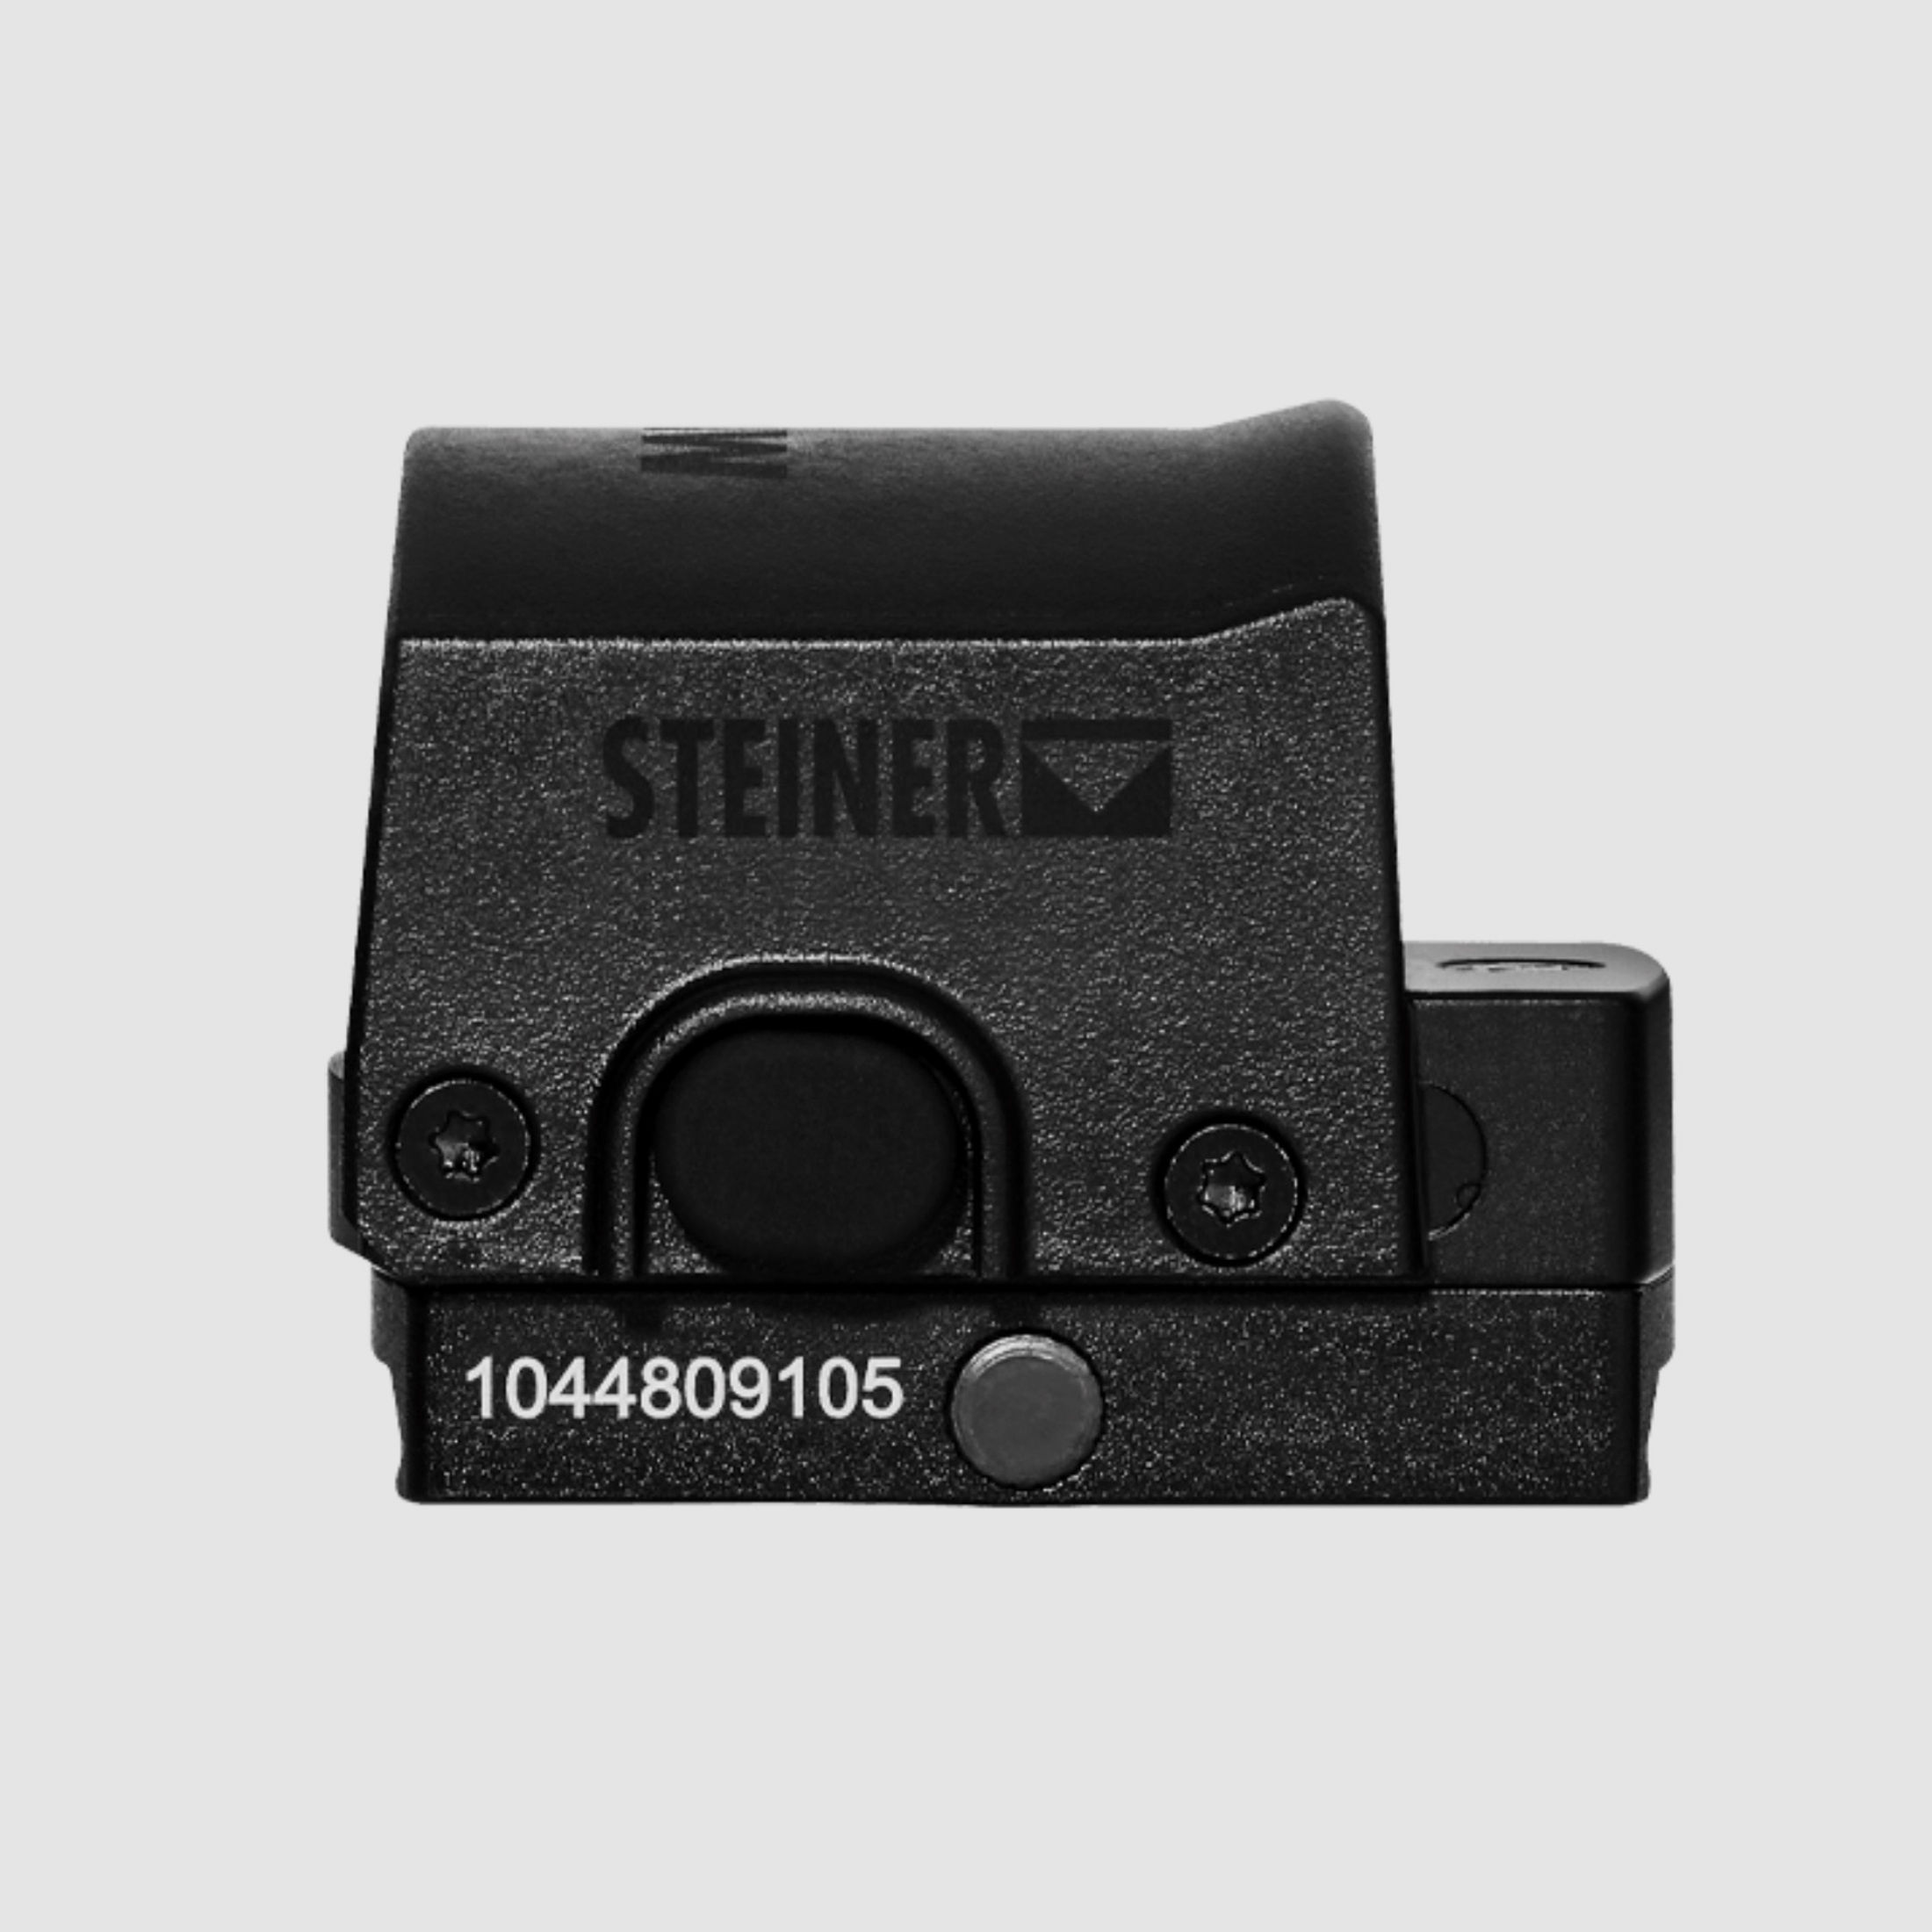 Steiner 202508700 Micro Reflex Sight MRS Picatinny